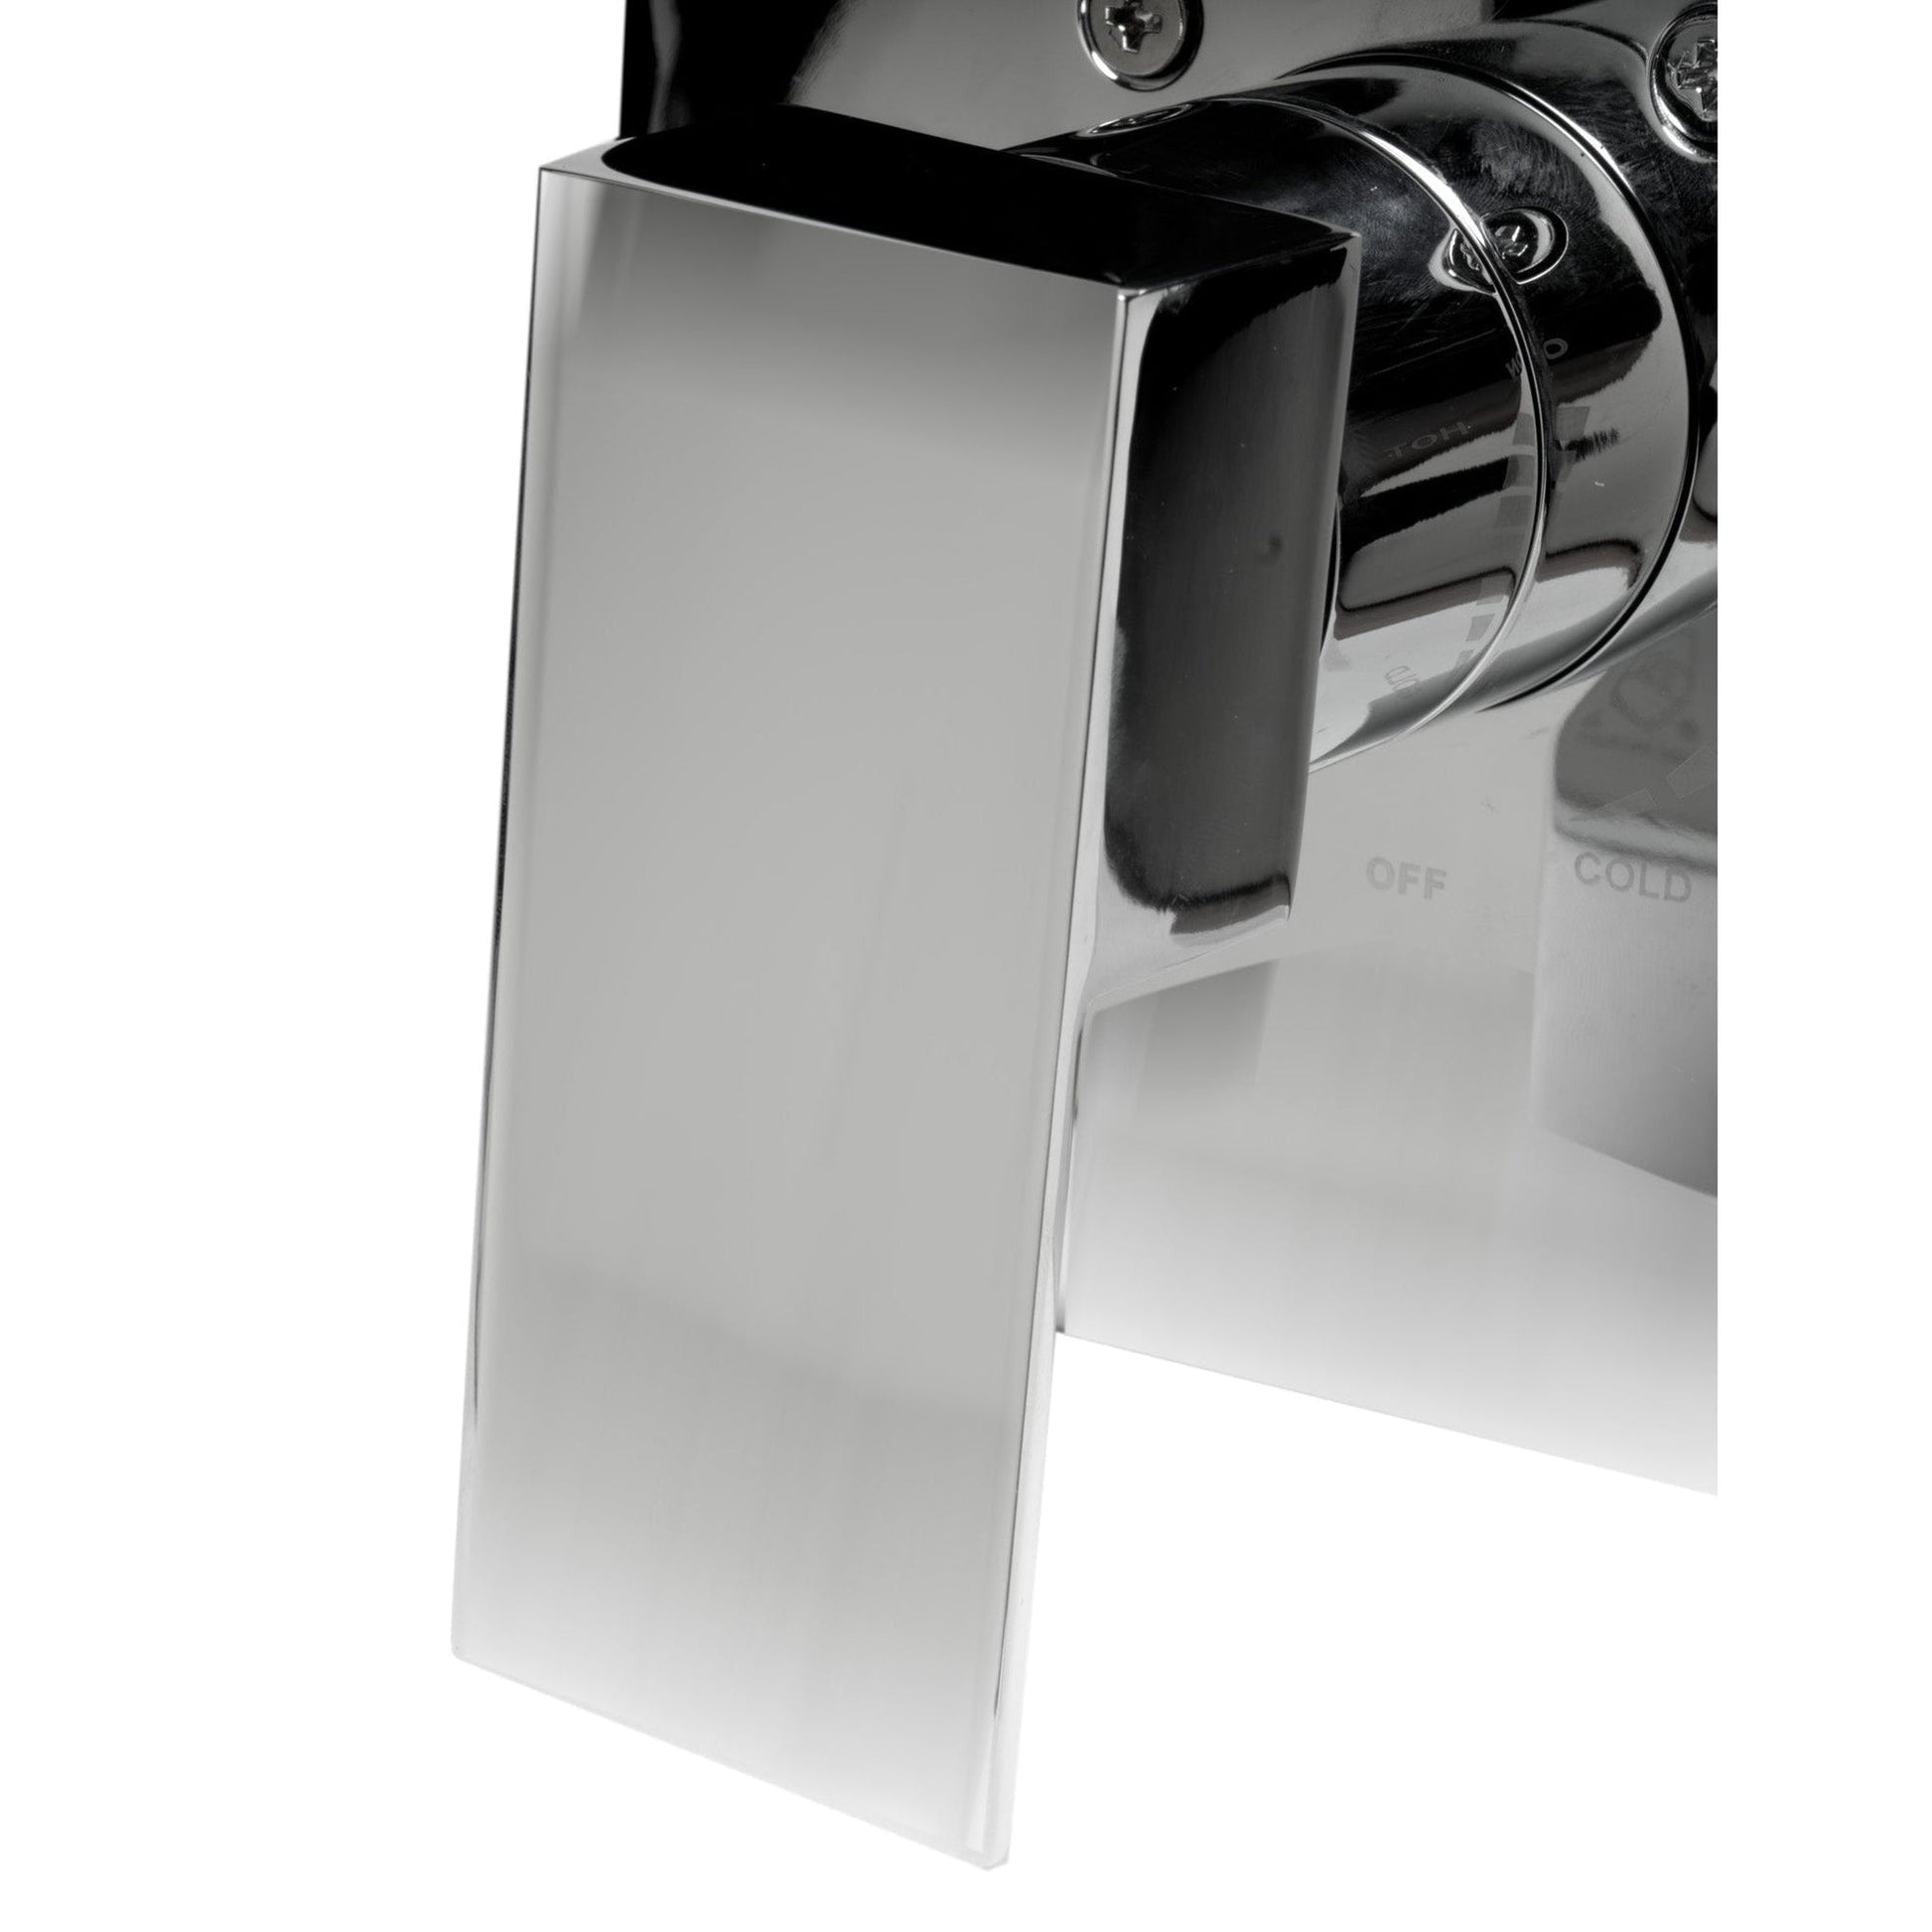 ALFI Brand AB6701-PC Square Polished Chrome Pressure Balanced Shower Mixer With Single Lever Handle